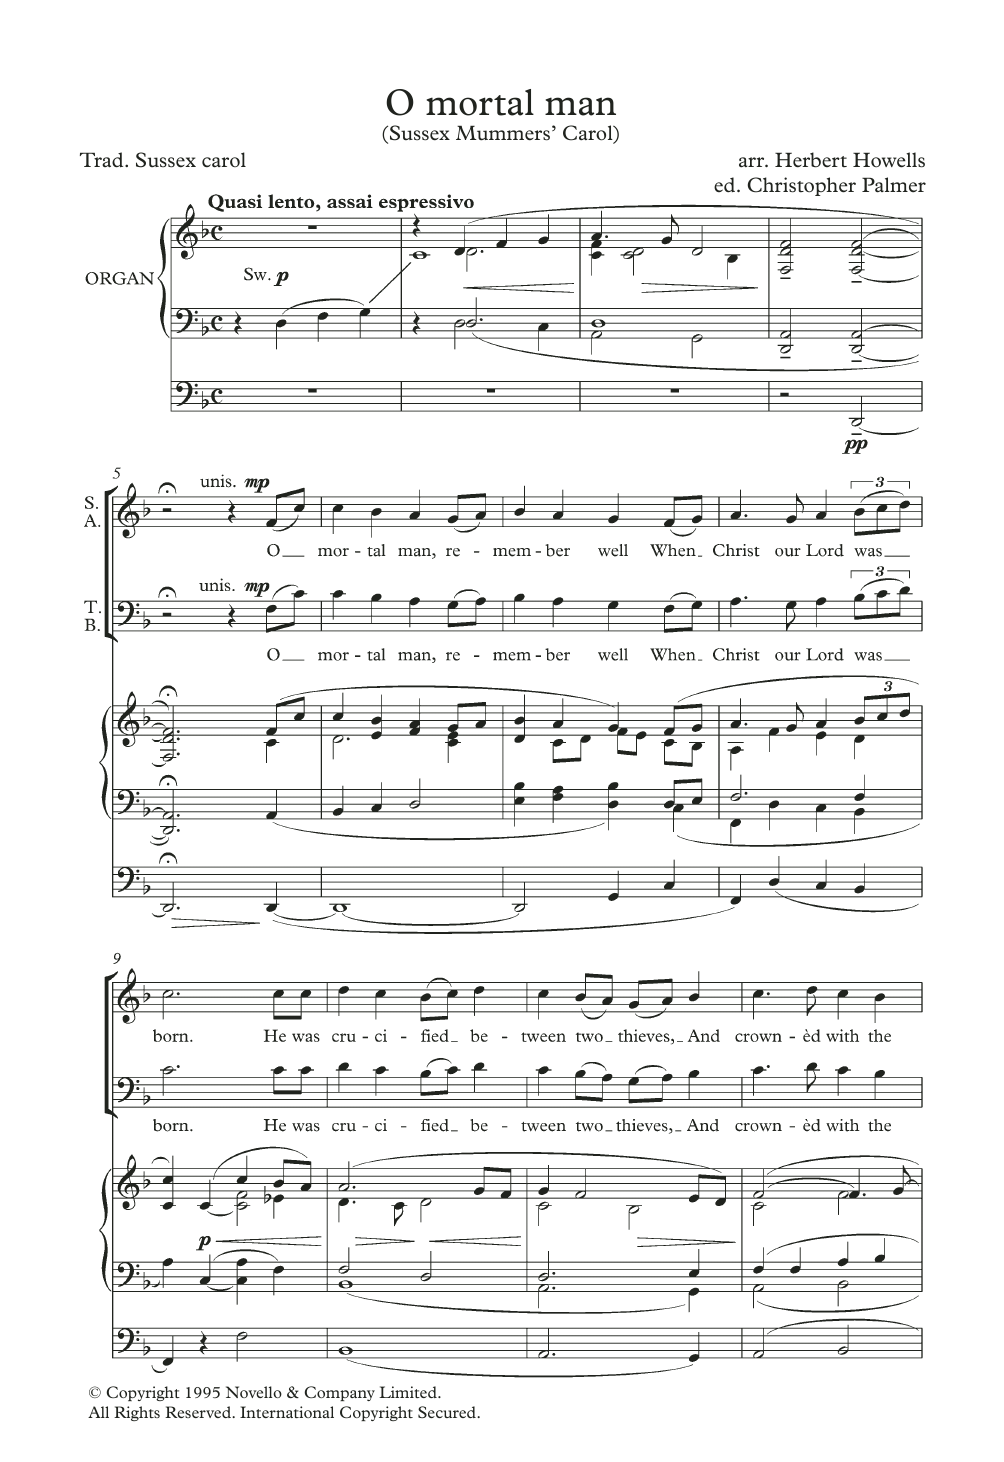 Traditional Carol O Mortal Man (Sussex Mummers' Carol) (arr. Herbert Howells) sheet music notes and chords arranged for SATB Choir